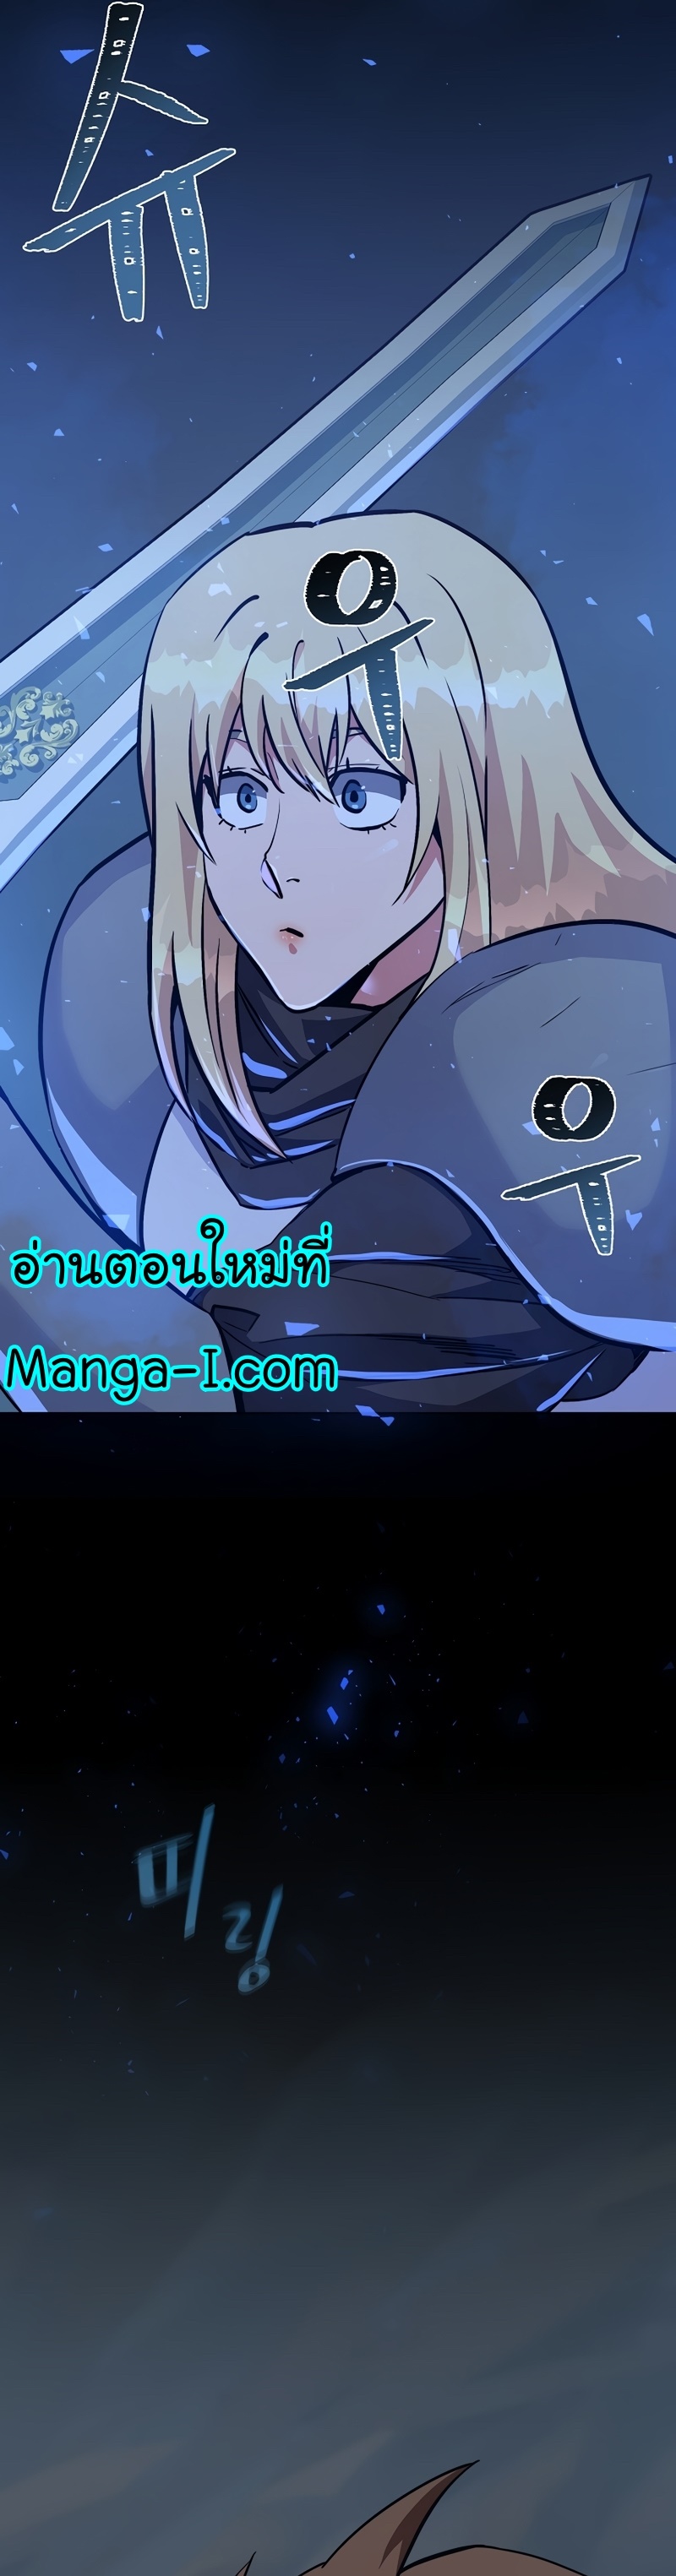 manga manwha Level 1 Player 60 (10)